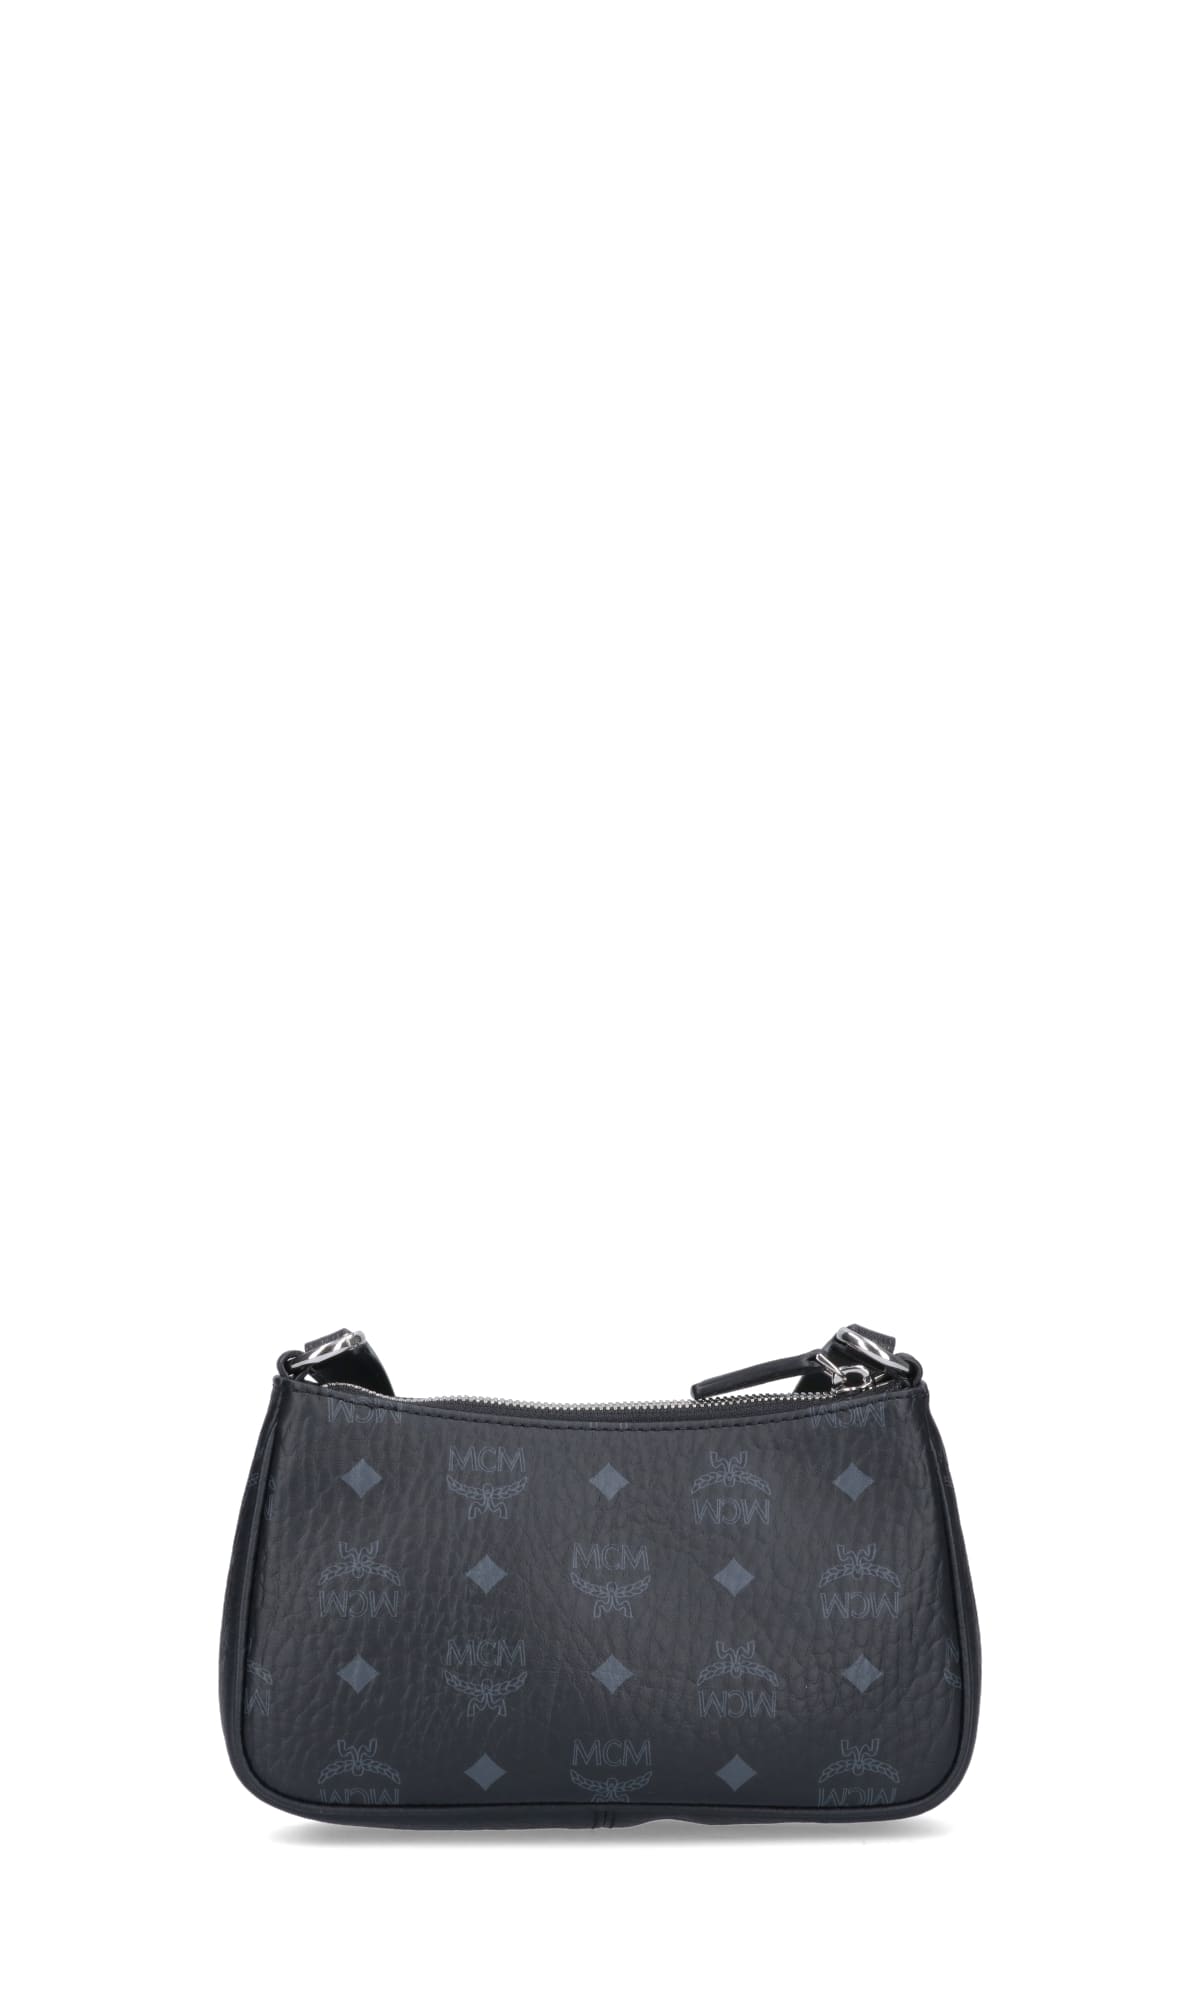 MCM munchen germany J5027 black handbag (L-17cm/W-26)genuin